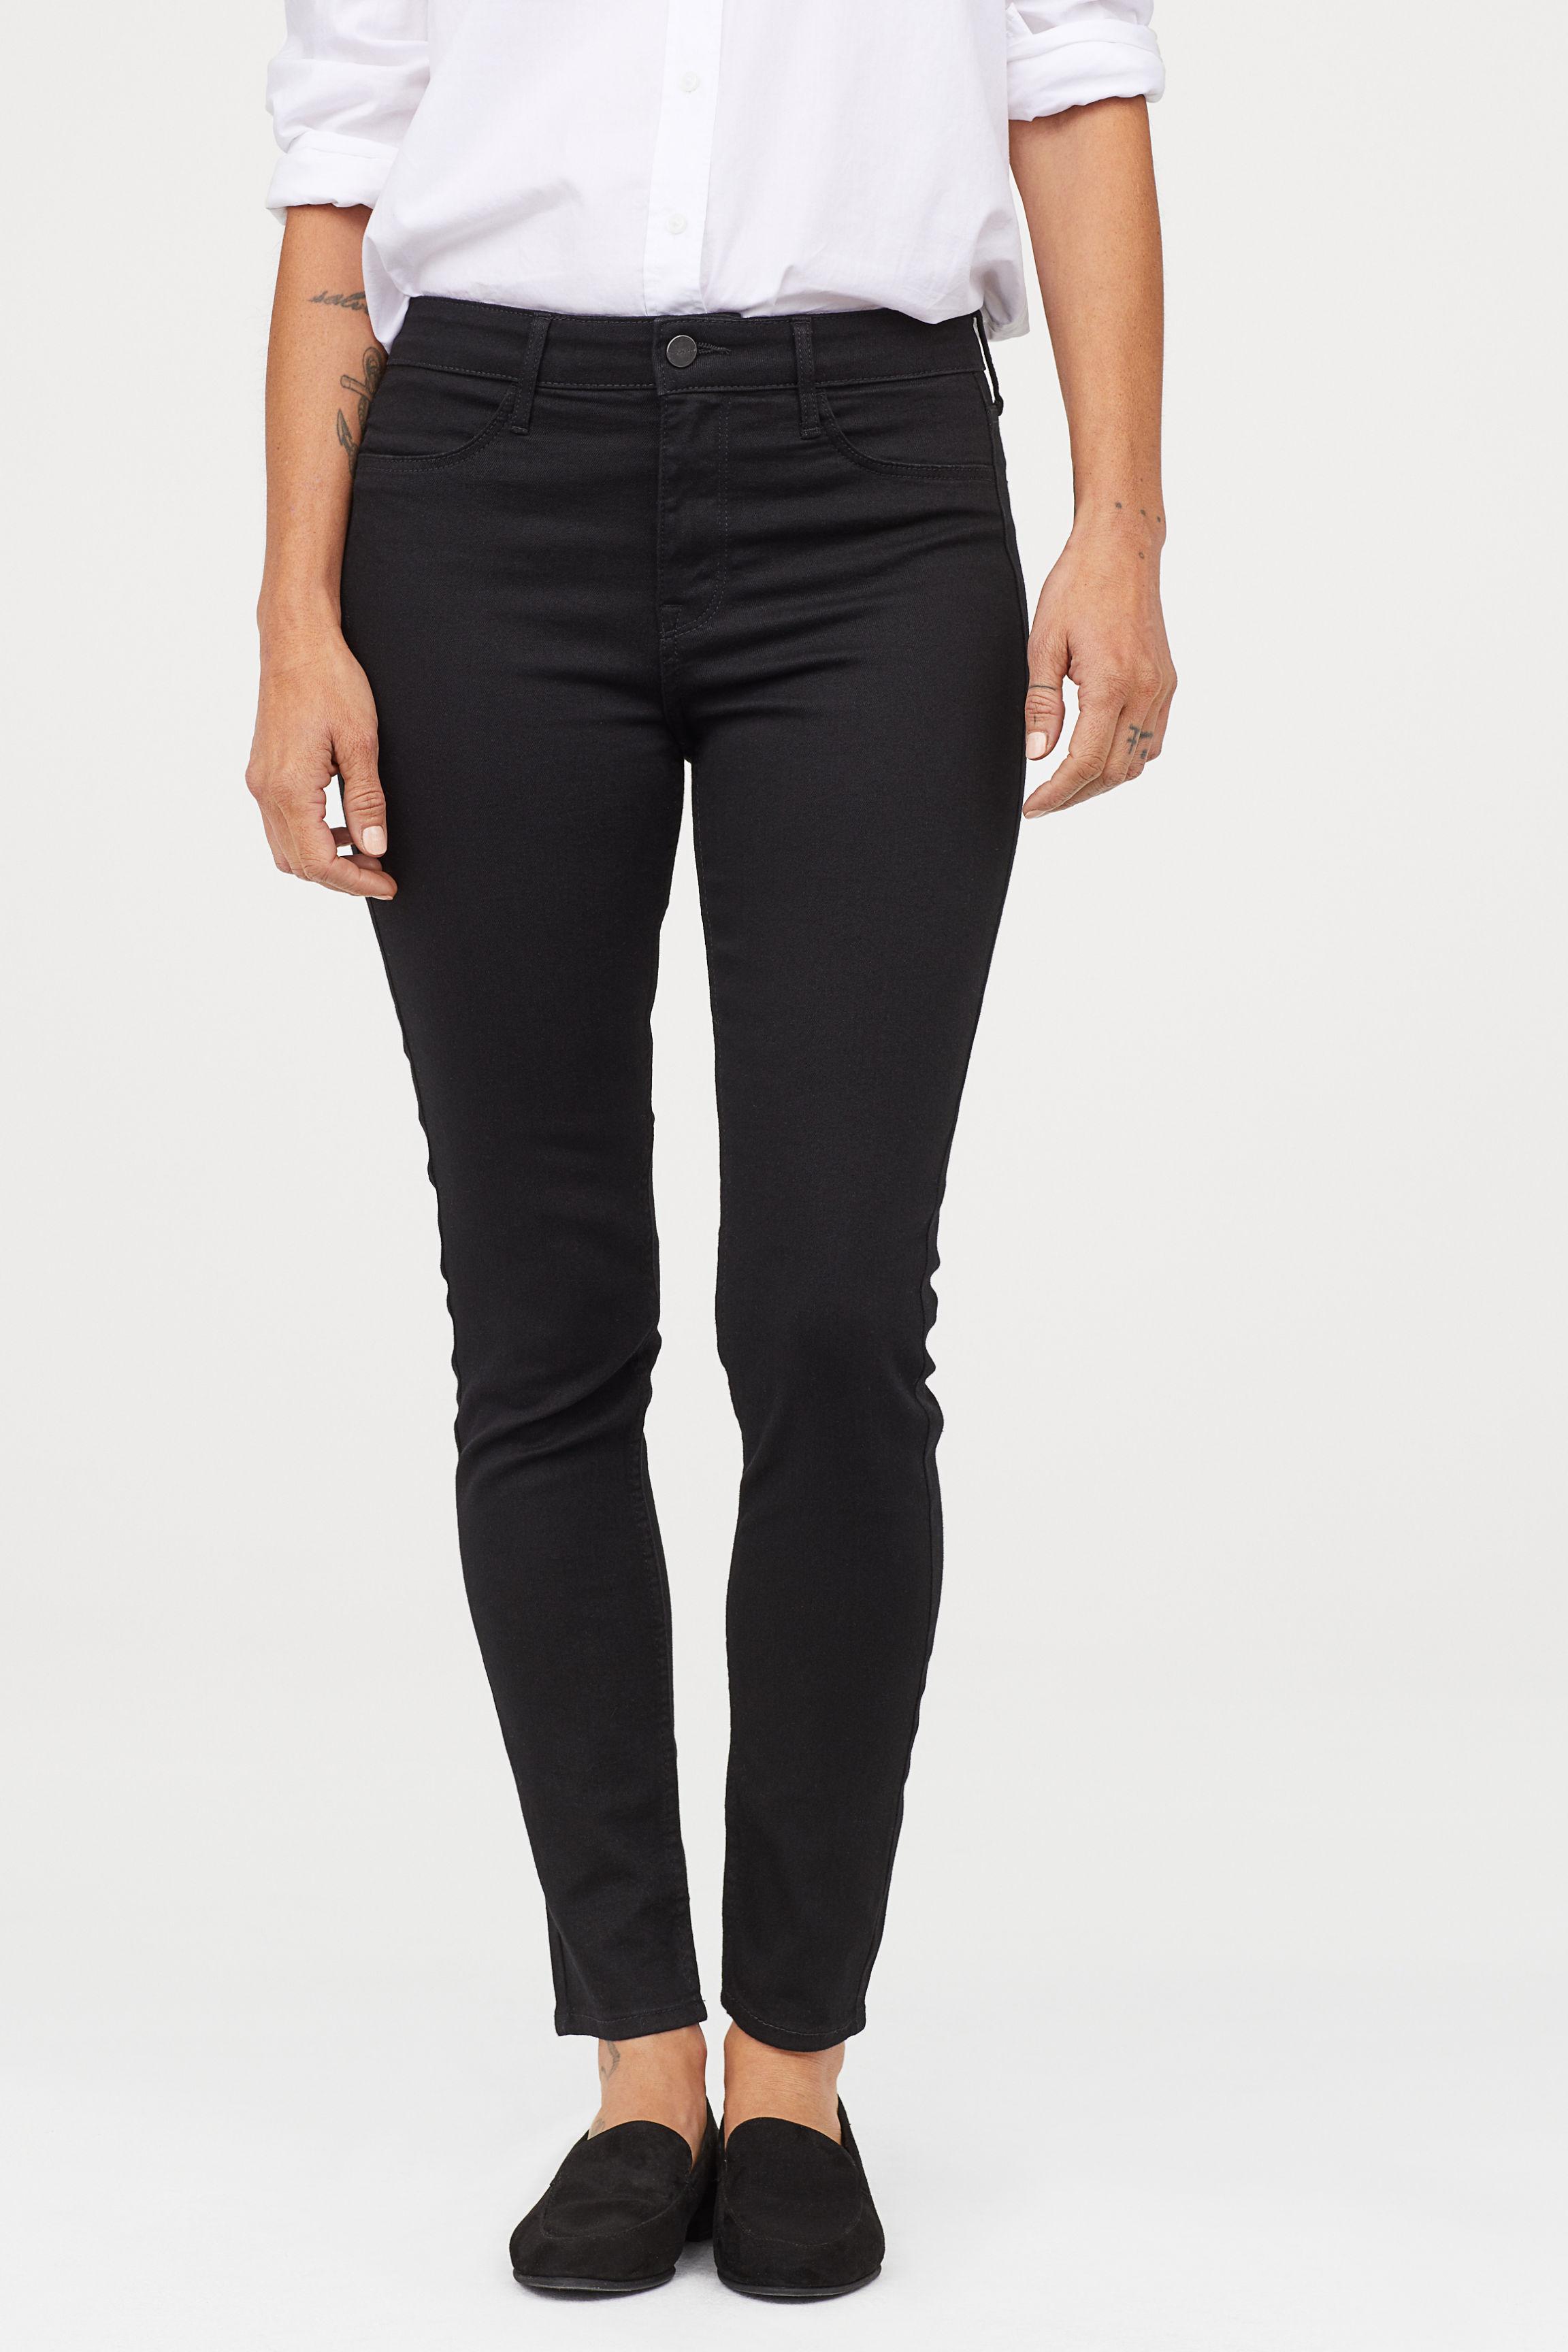 H&M Denim Skinny Regular Ankle Jeans in Black Denim (Black) - Lyst